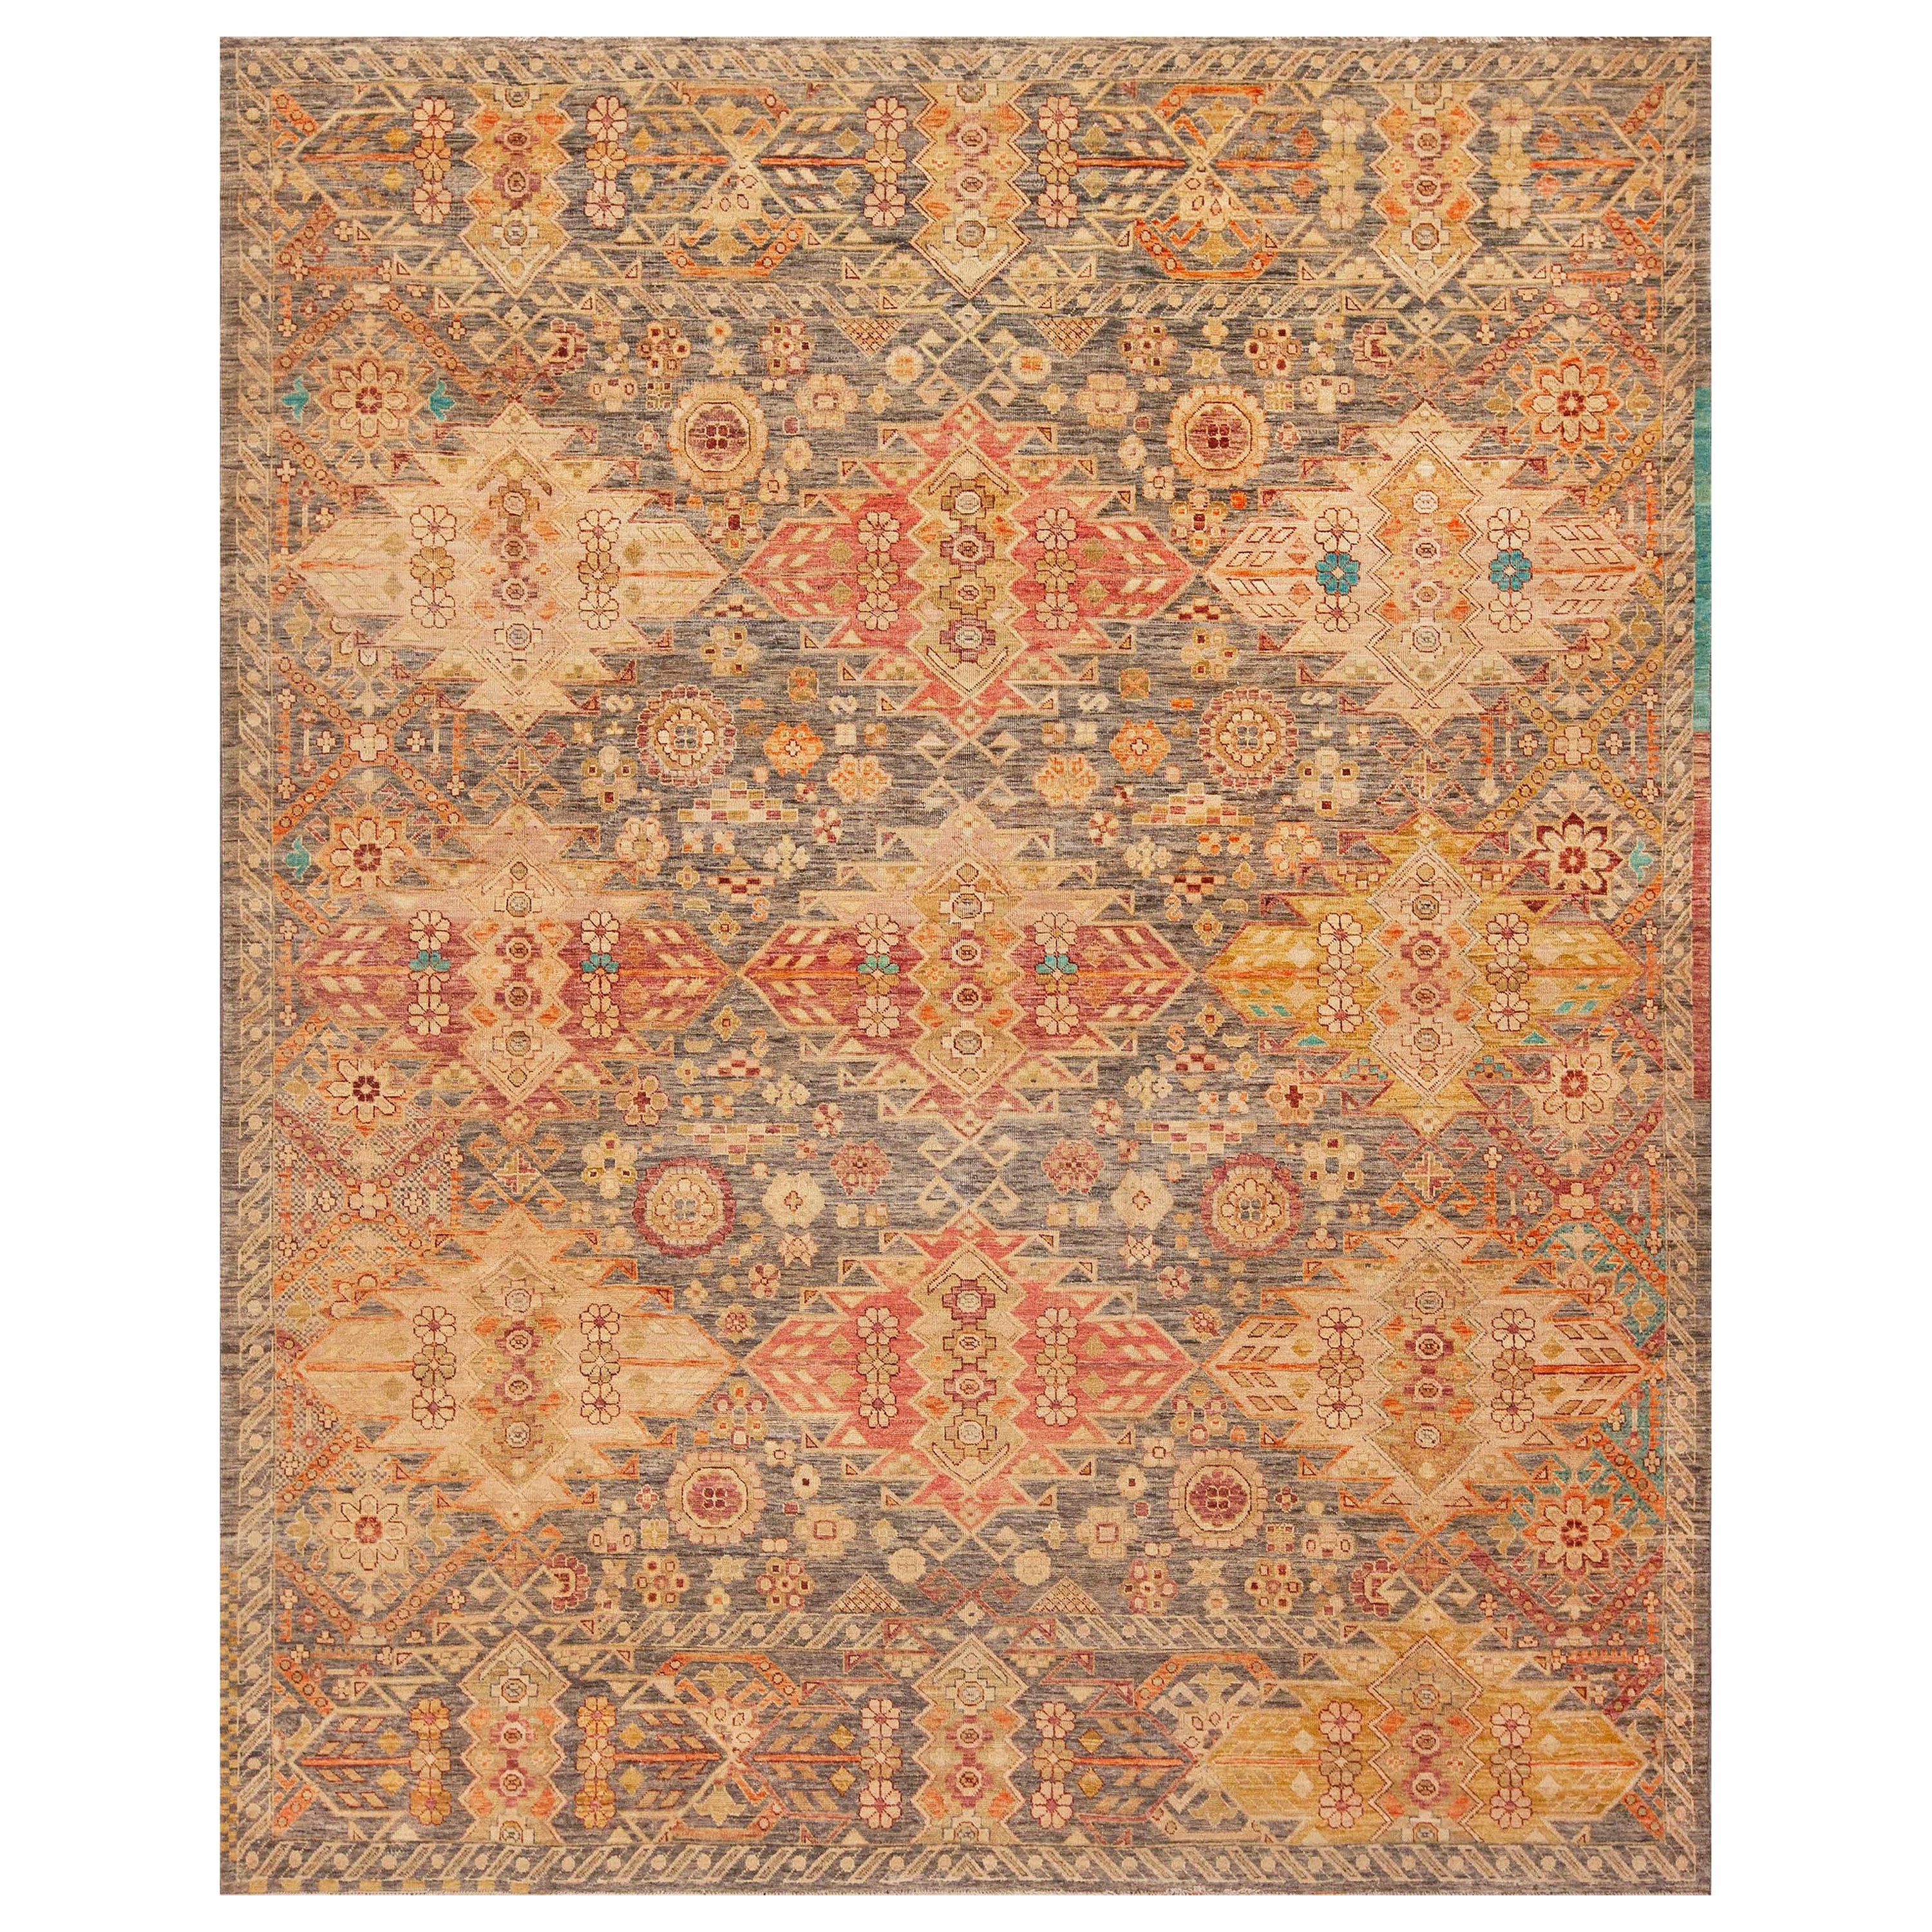 Collection Nazmiyal, design tribal et géométrique rustique, tapis moderne de 8'3" x 9'10"